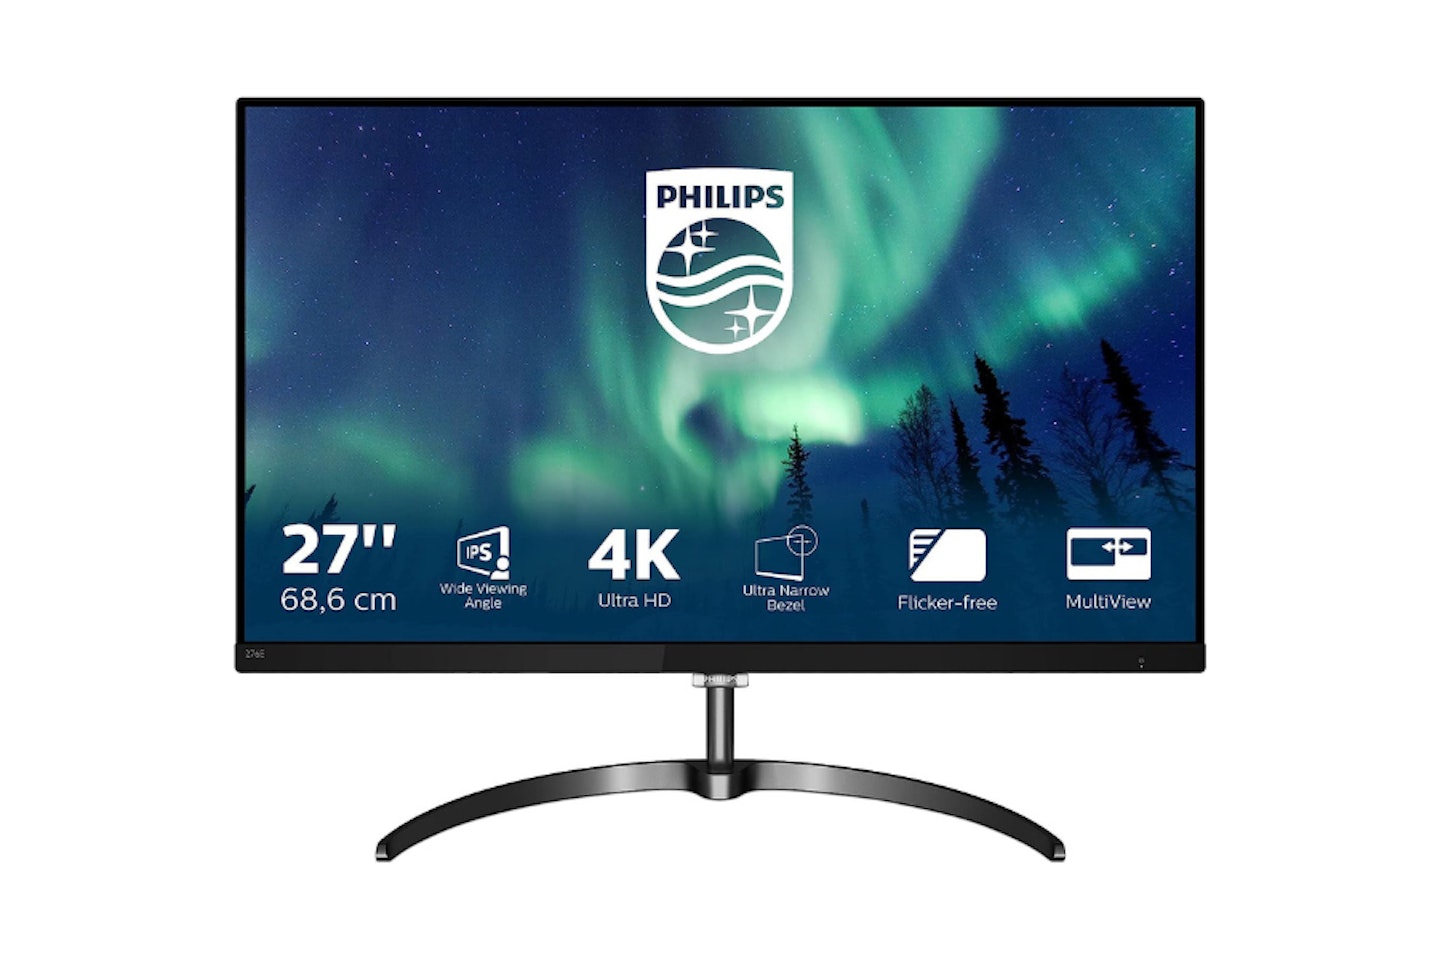 Philips 276E8VJSB - 27 Inch 4K Monitor